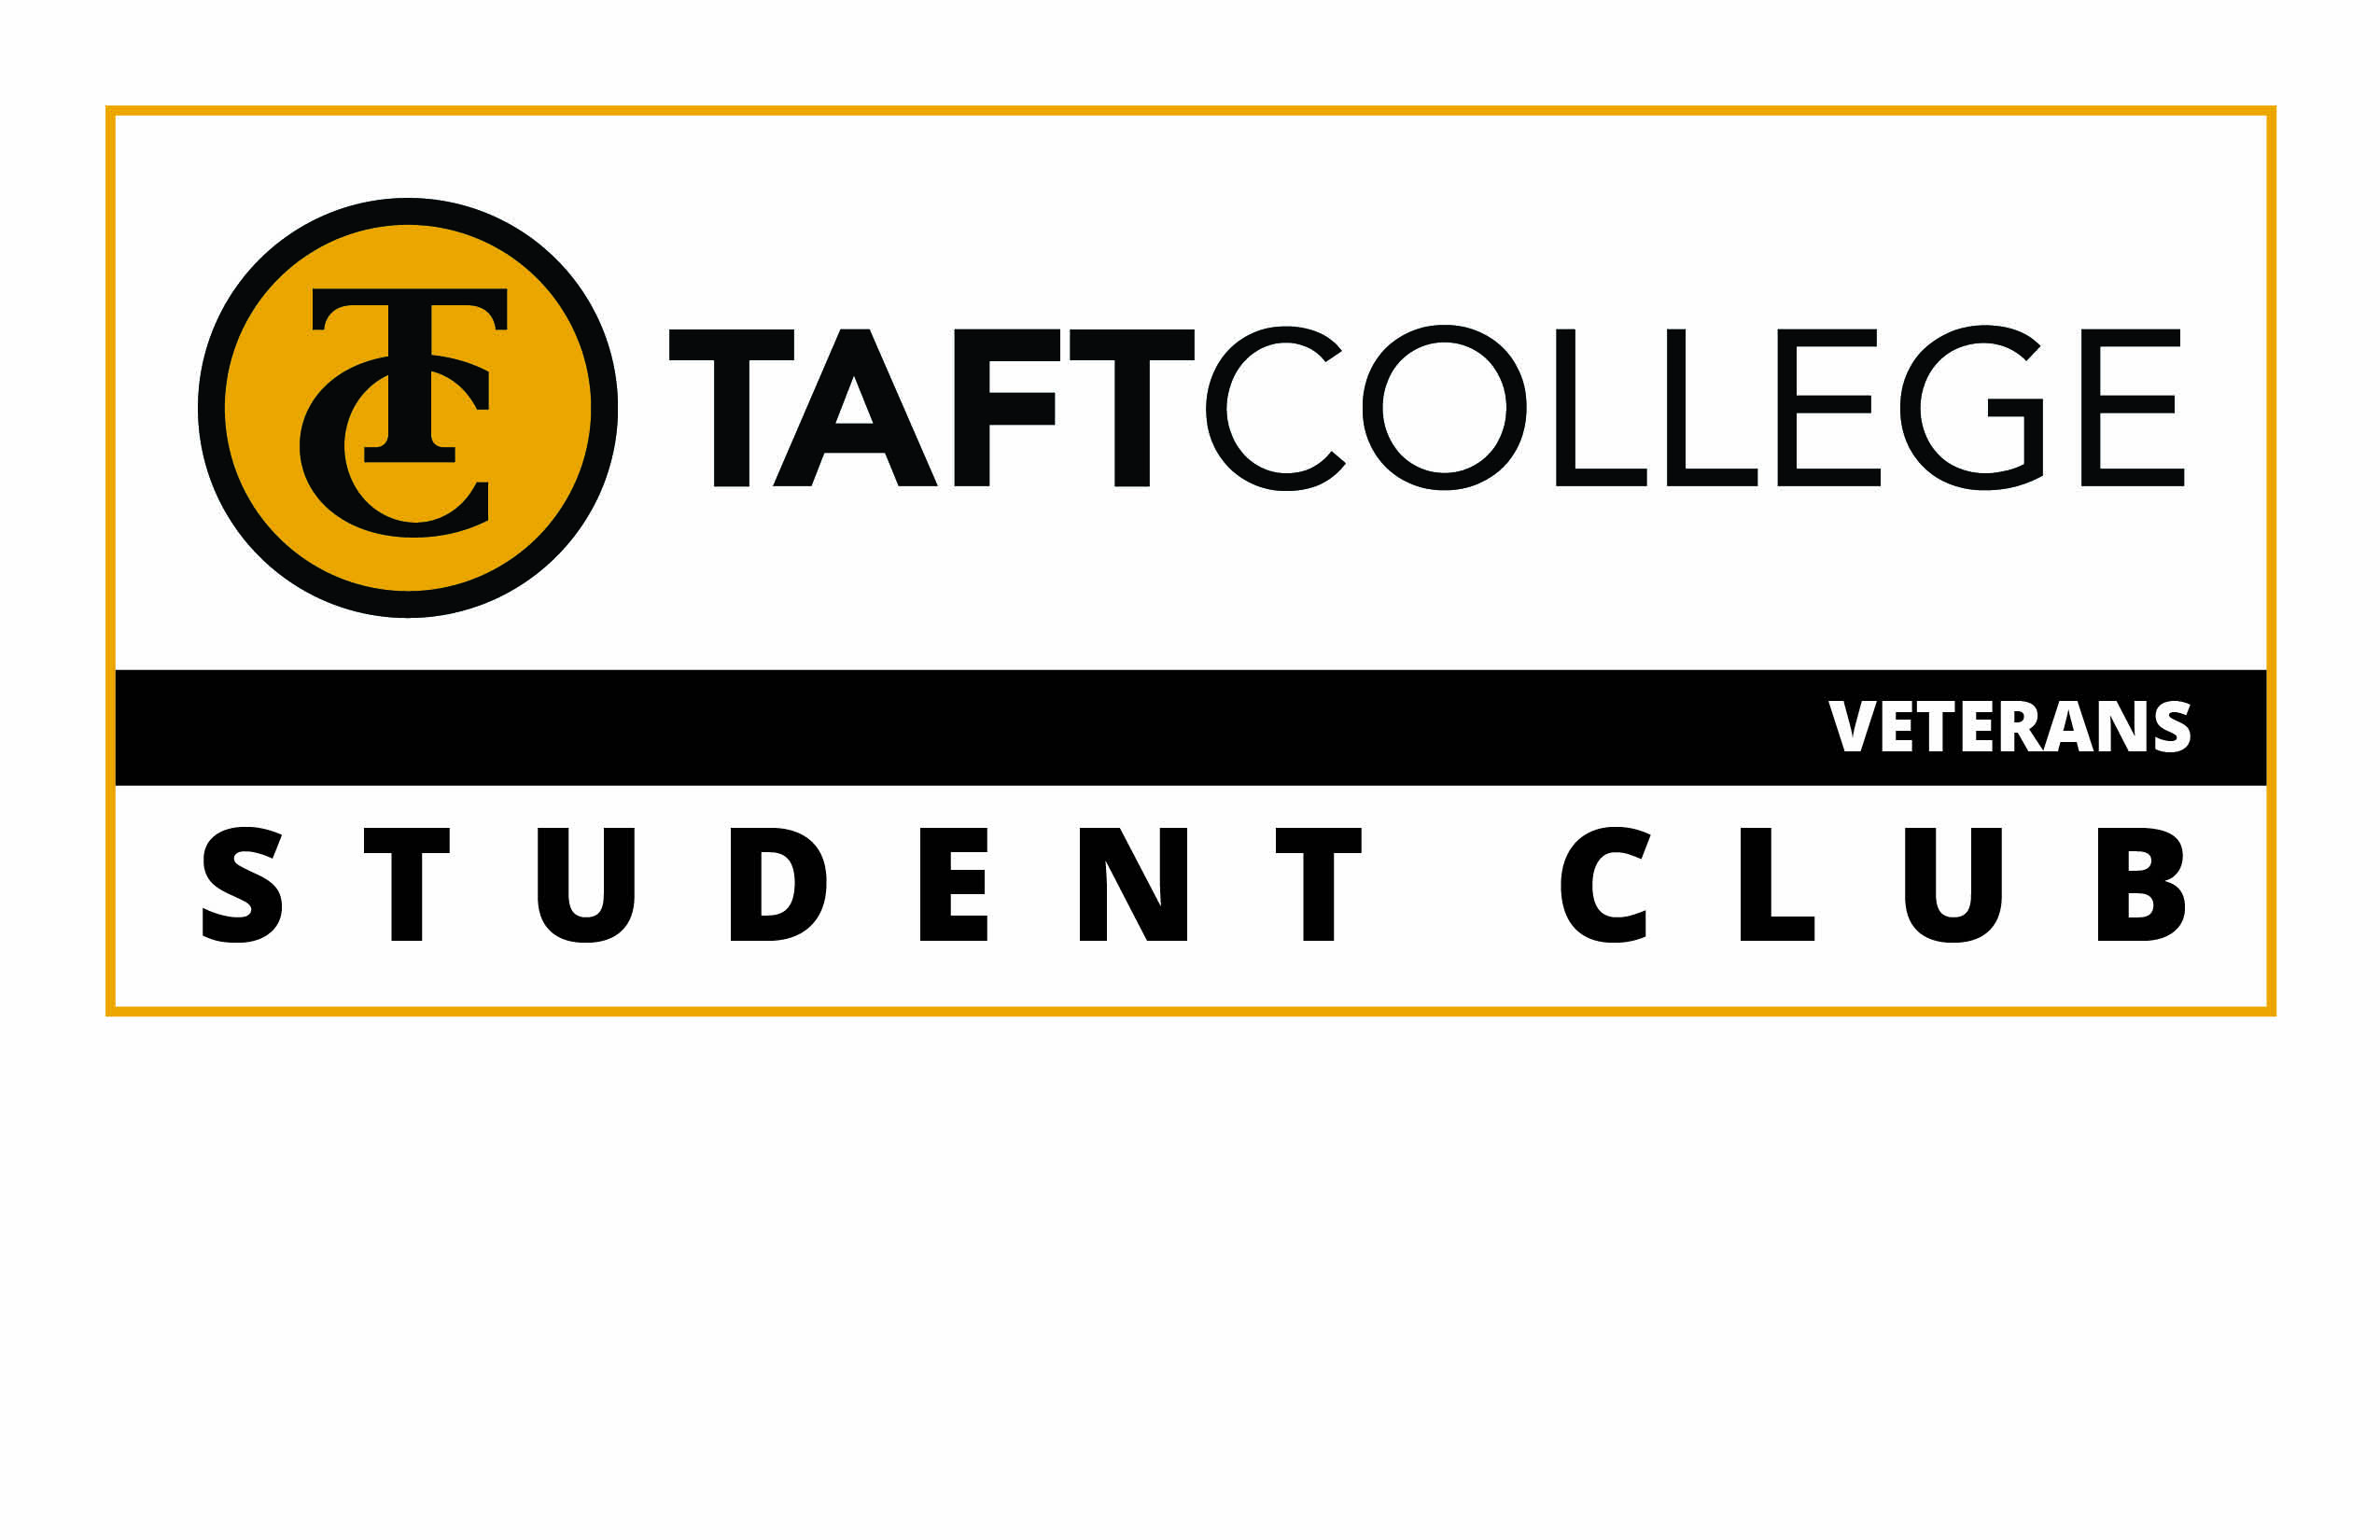 Veterans Club logo